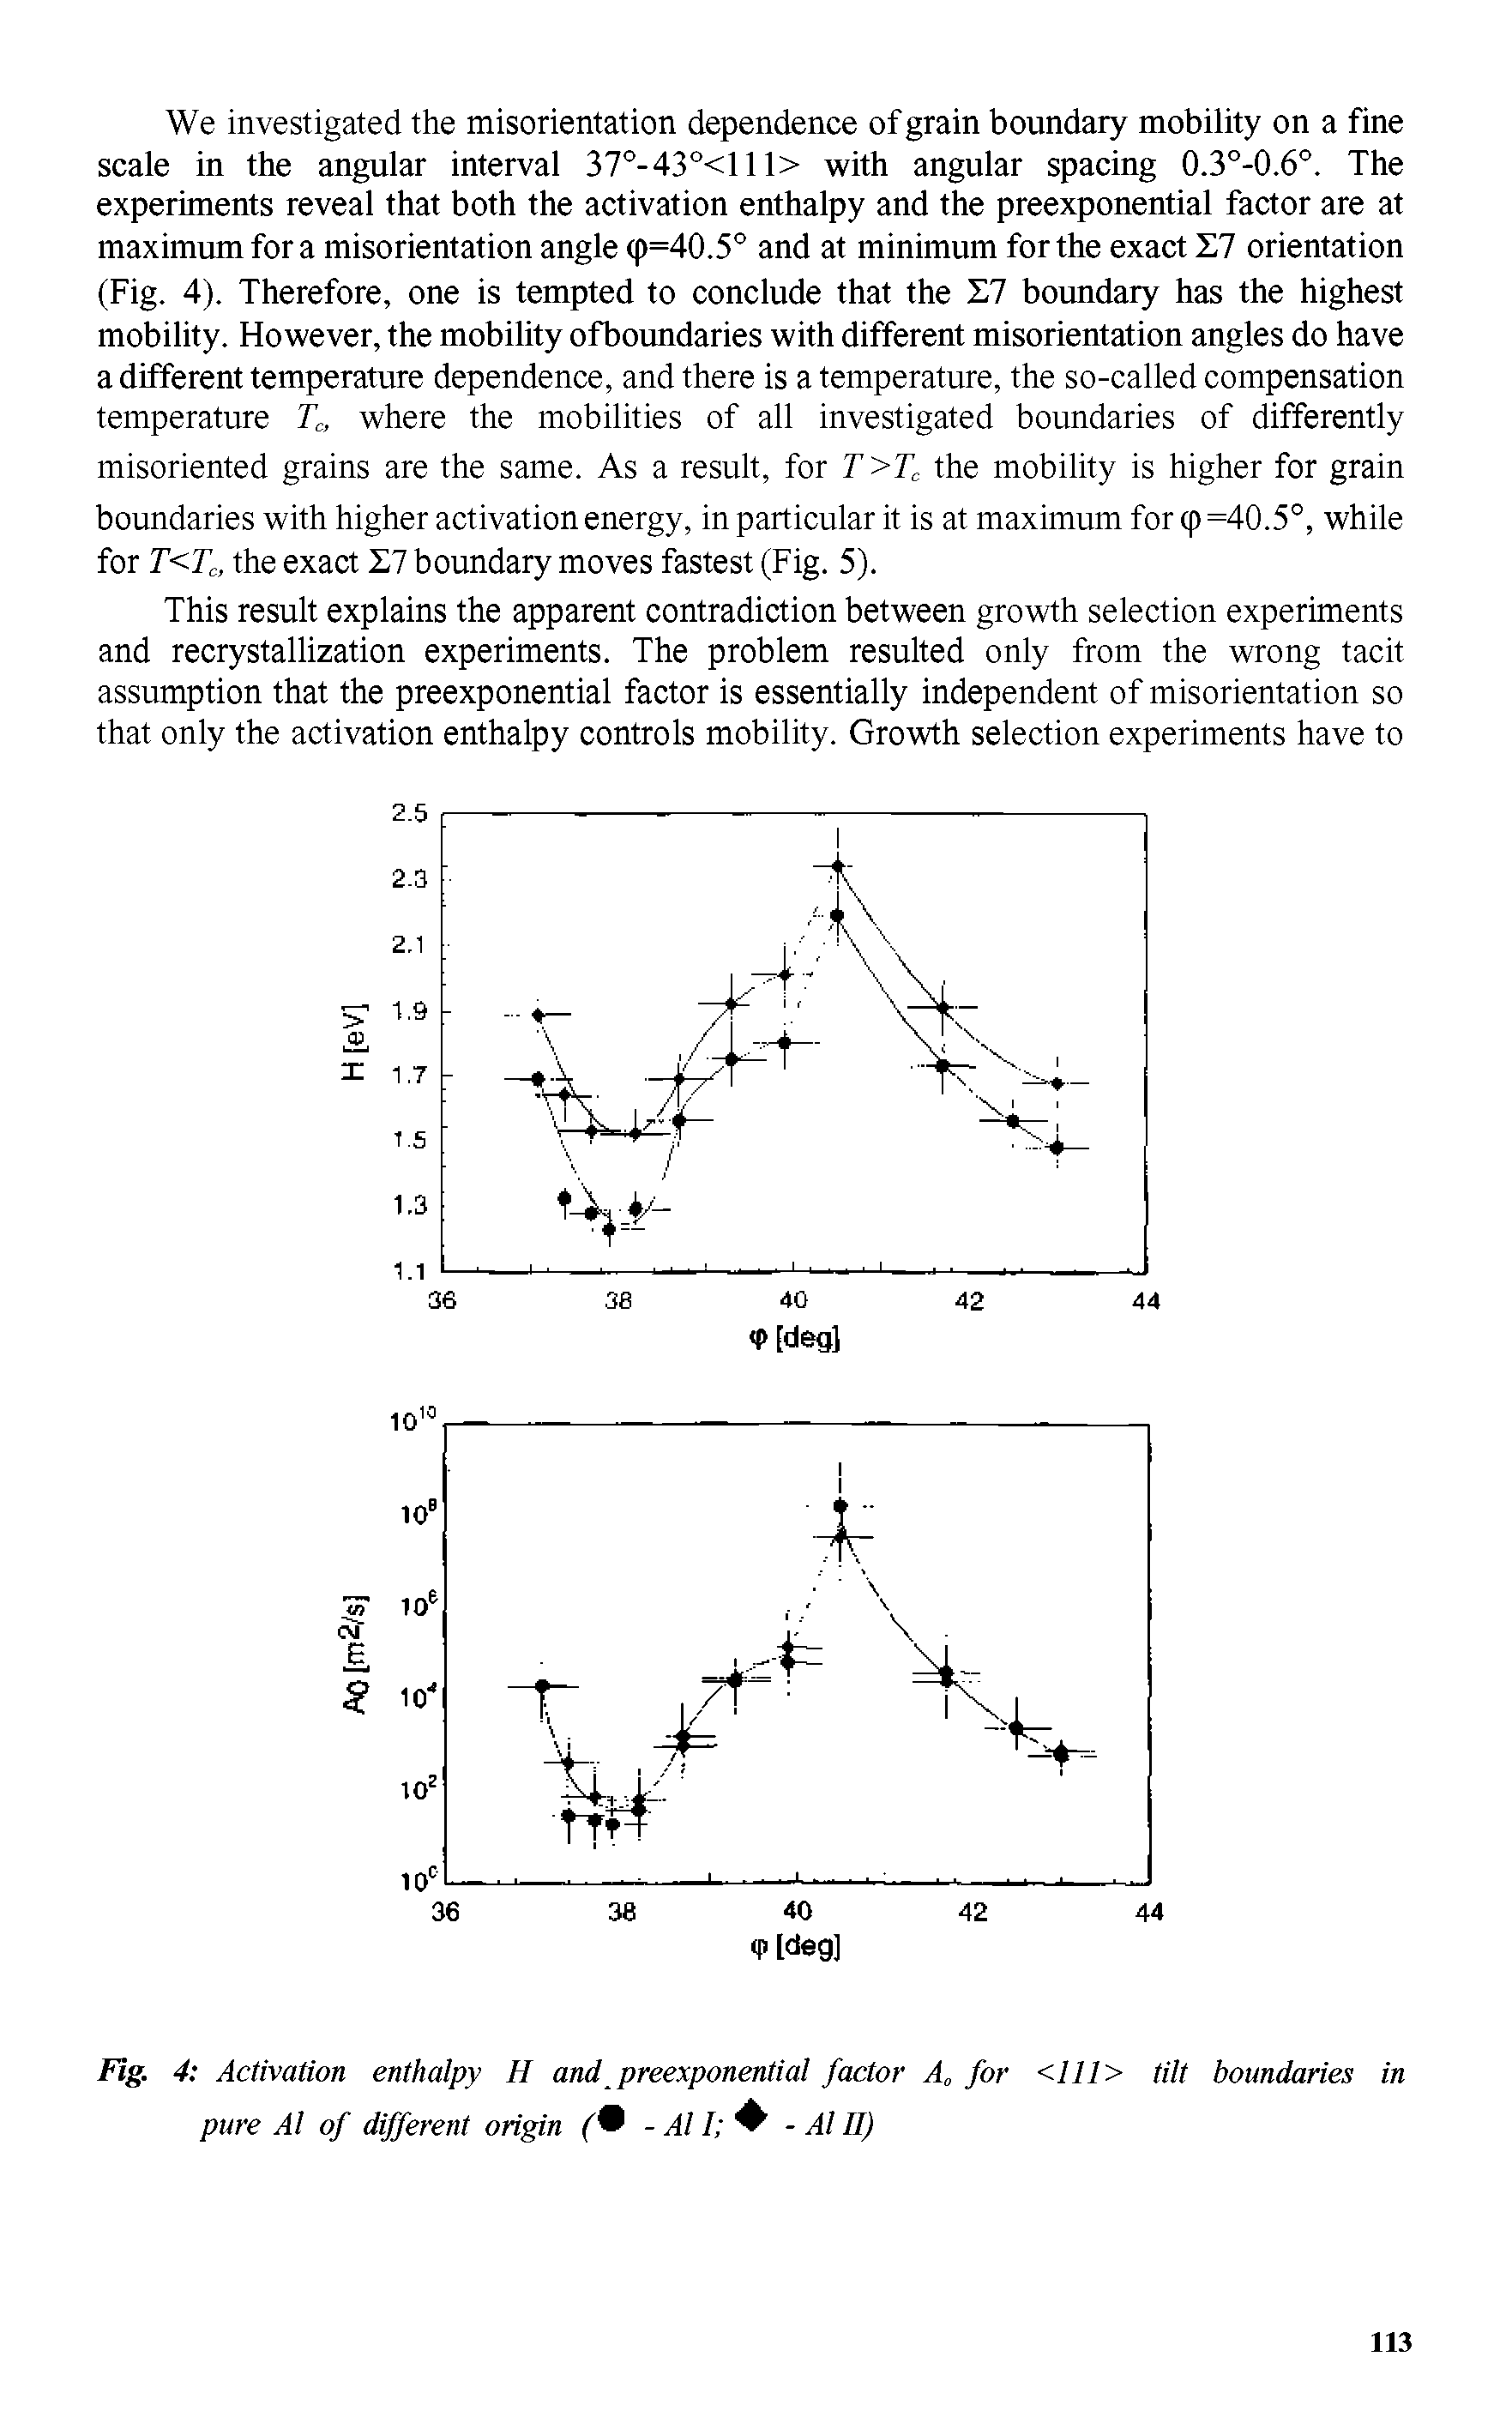 Fig. 4 Activation enthalpy H and preexponential factor A for <777 > tilt boundaries in pure Al of different origin (9 - Al I - Al II)...